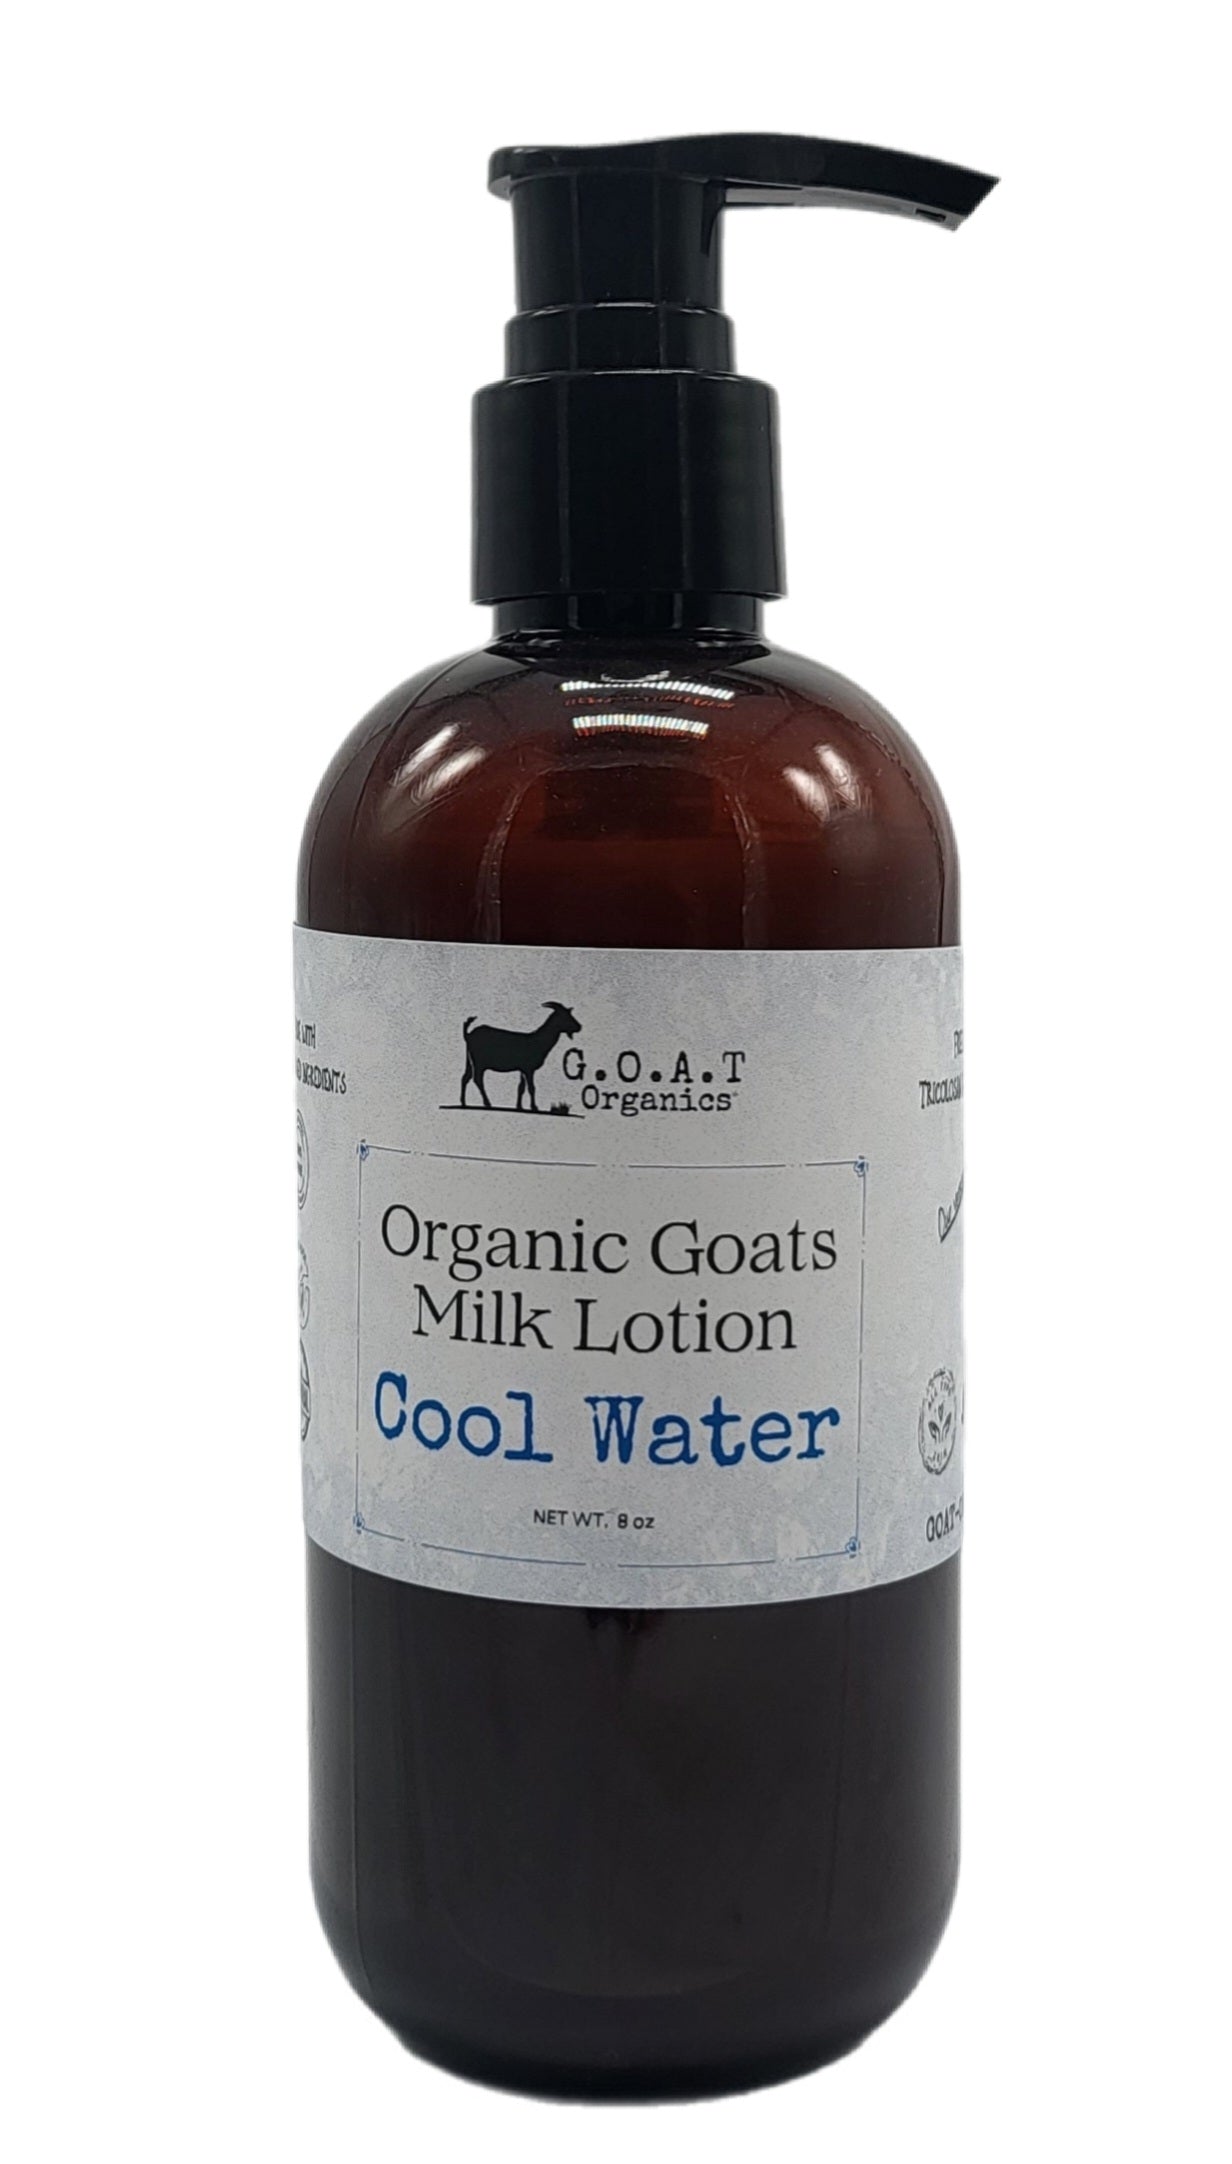 Cool Water Organic Goat Milk Lotion